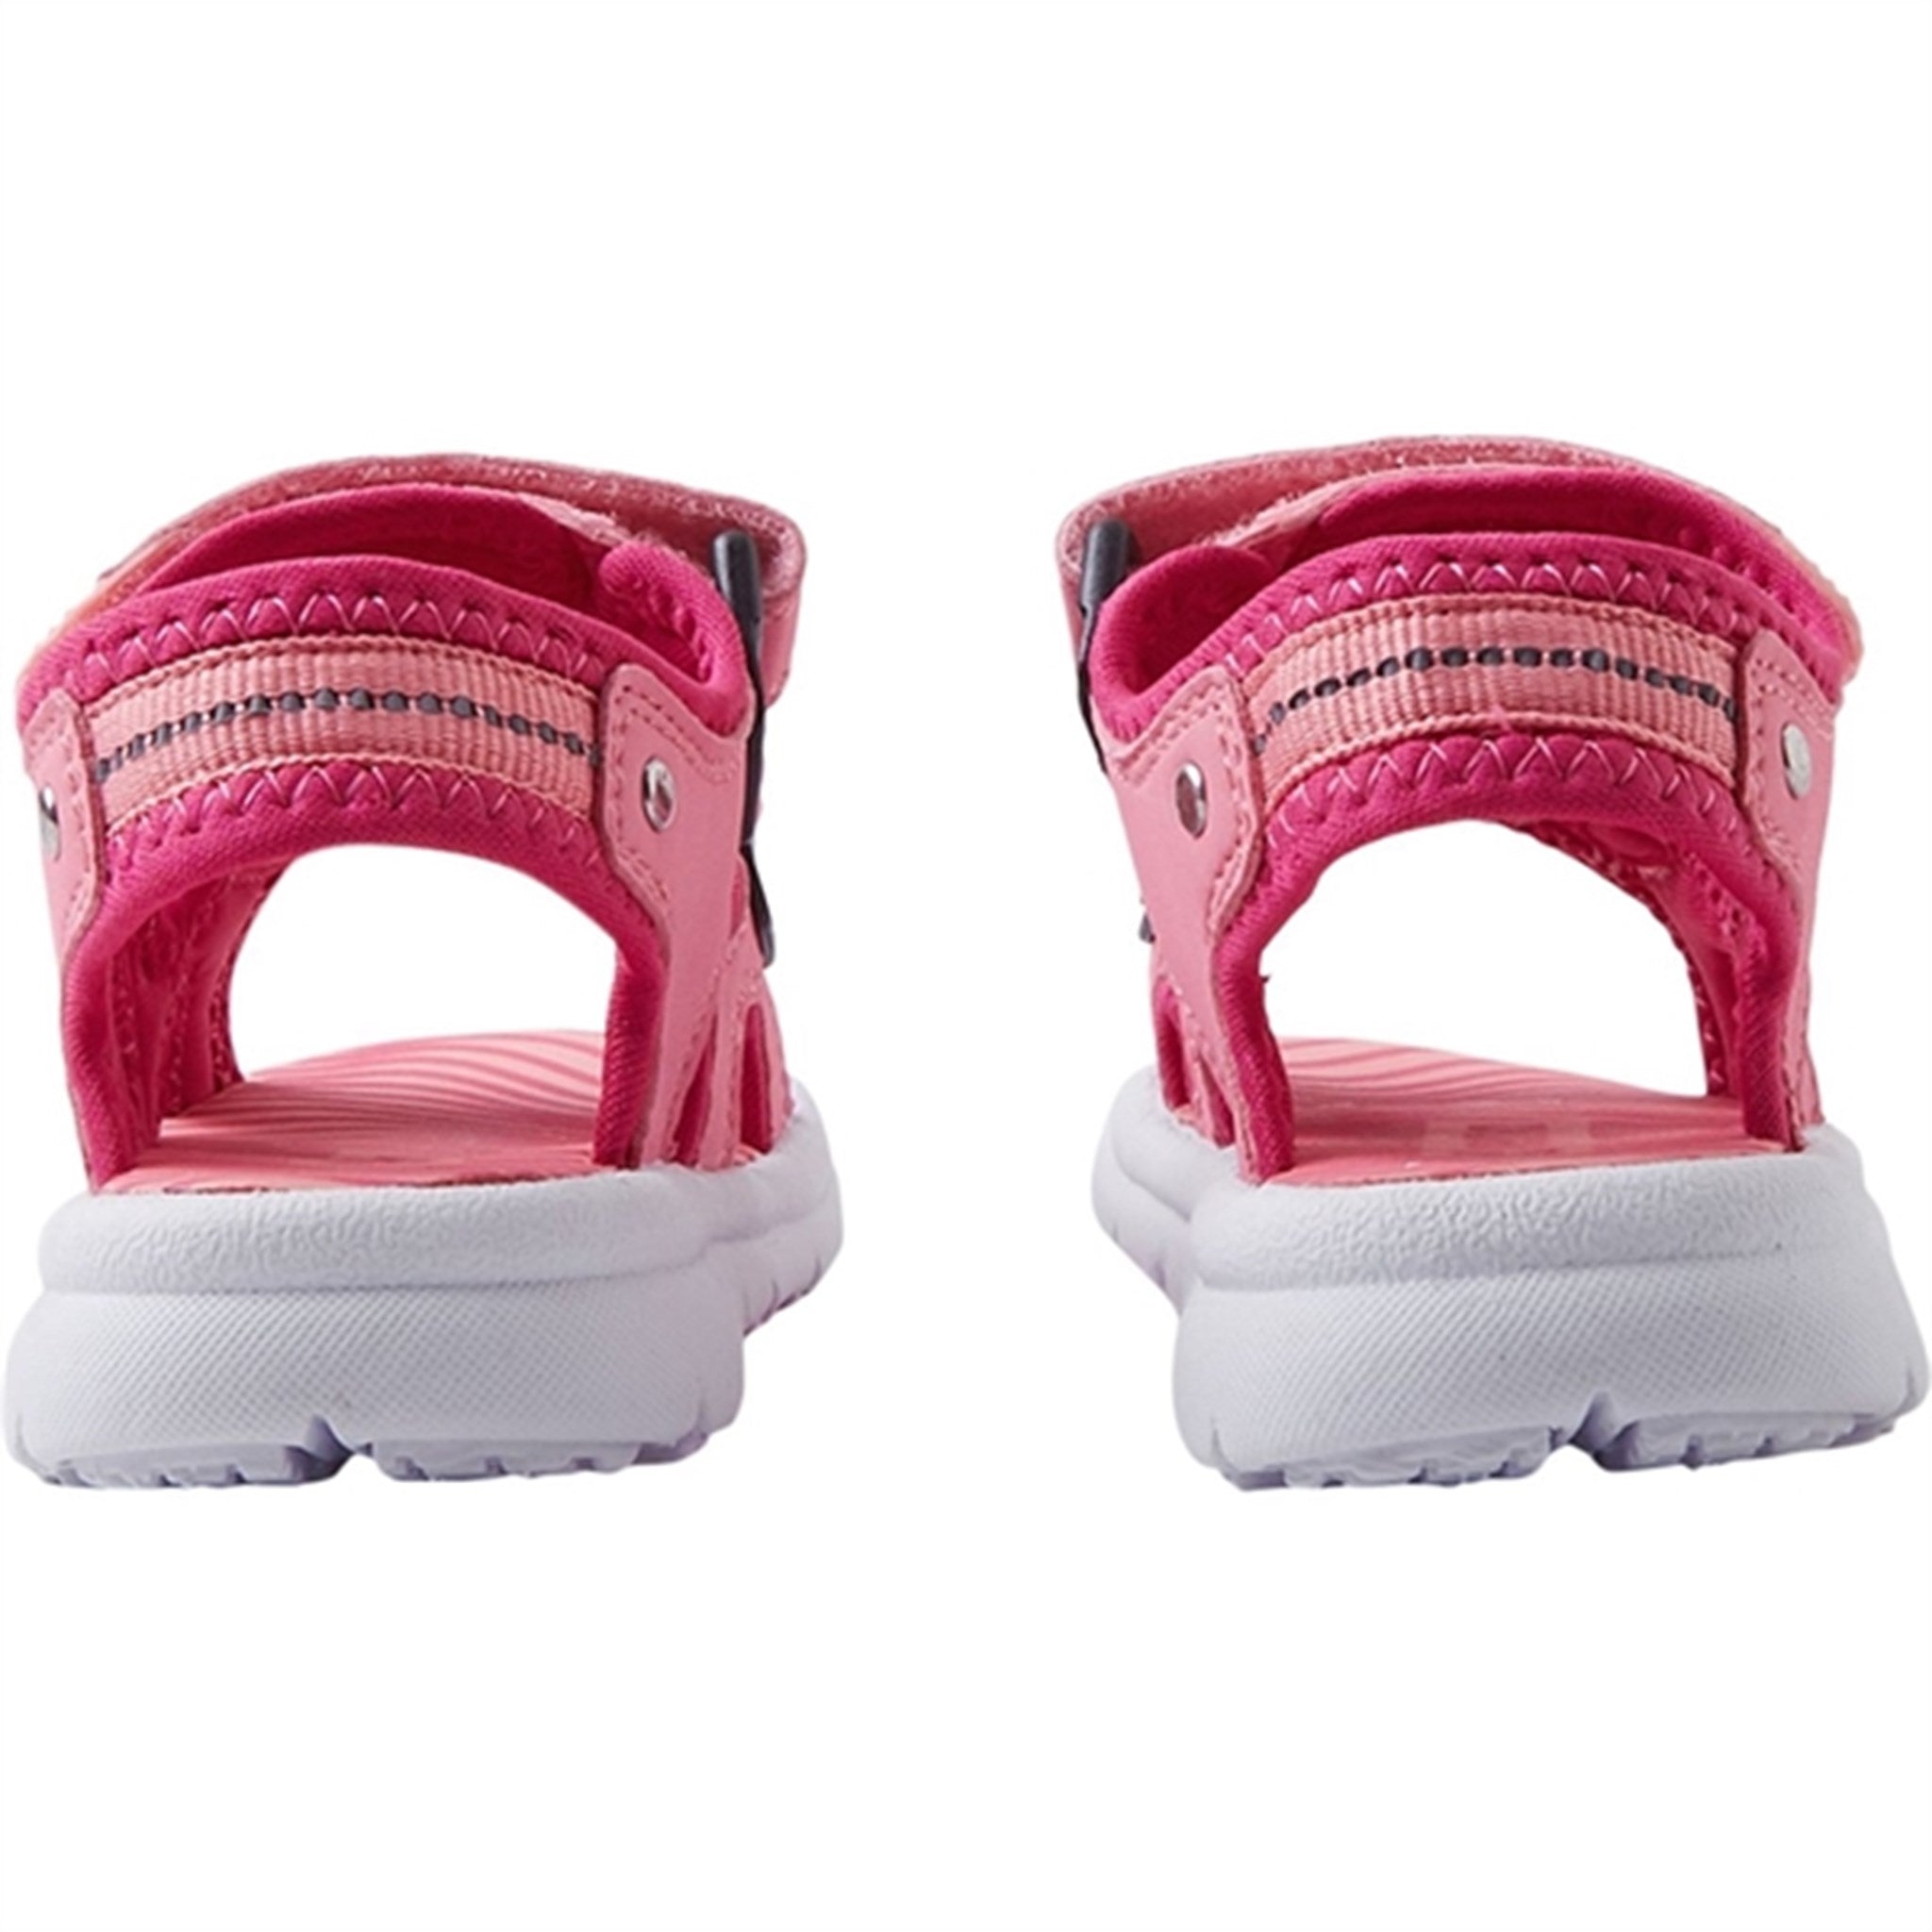 Reima Sandals Bungee Sunset Pink 7